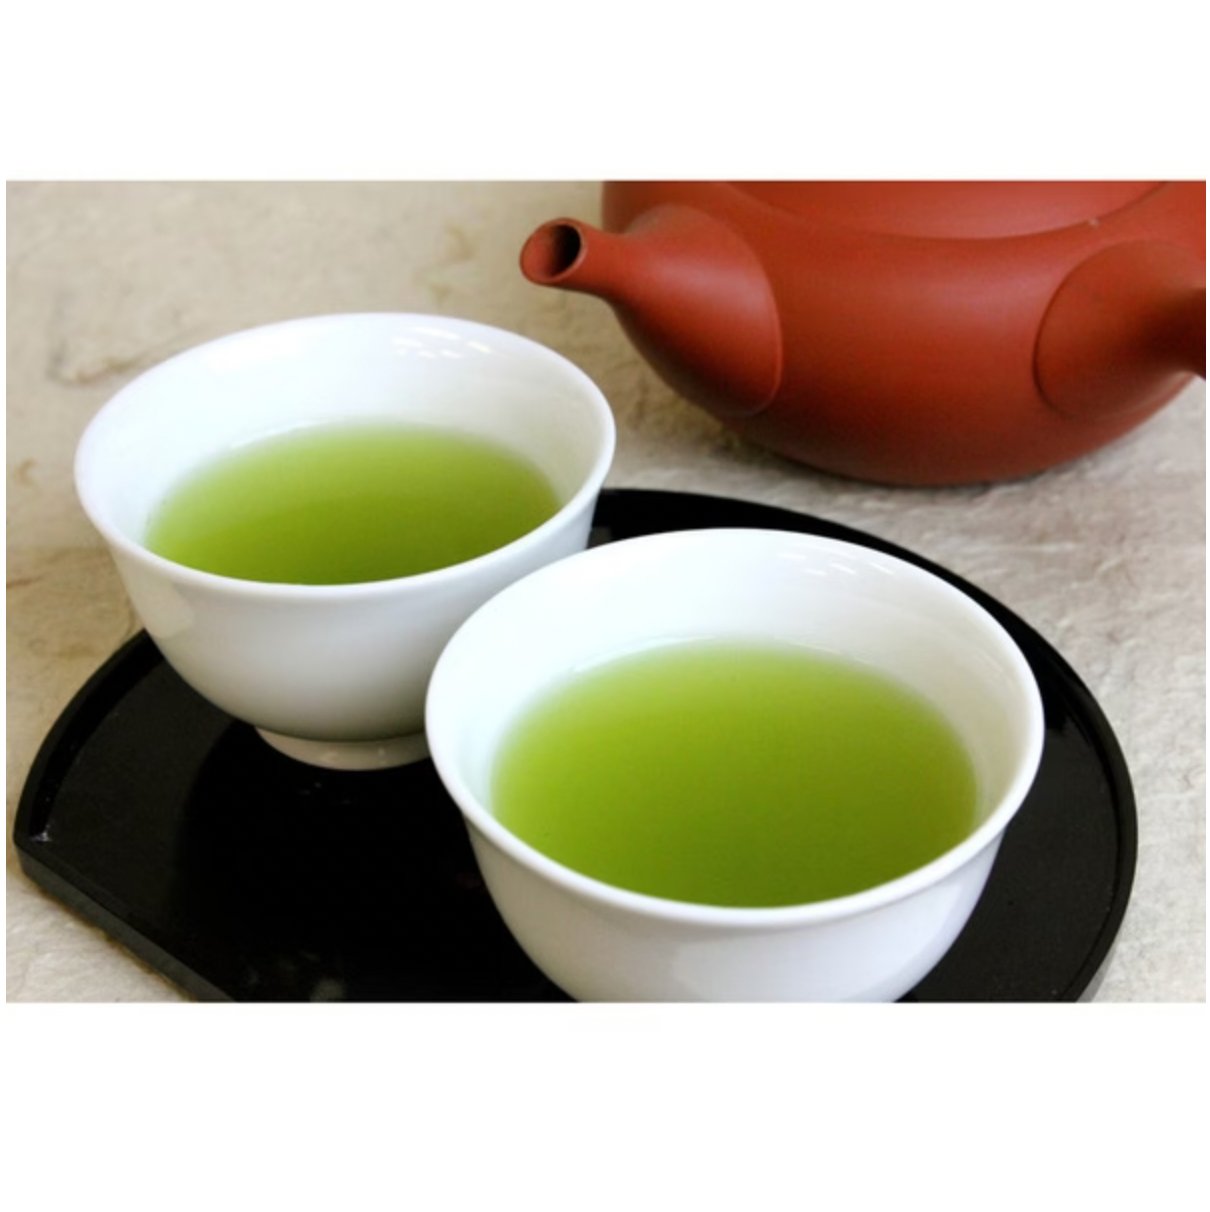 Juroen Kakegawa green tea with matcha using Shizuoka matcha 100g - NihonMura